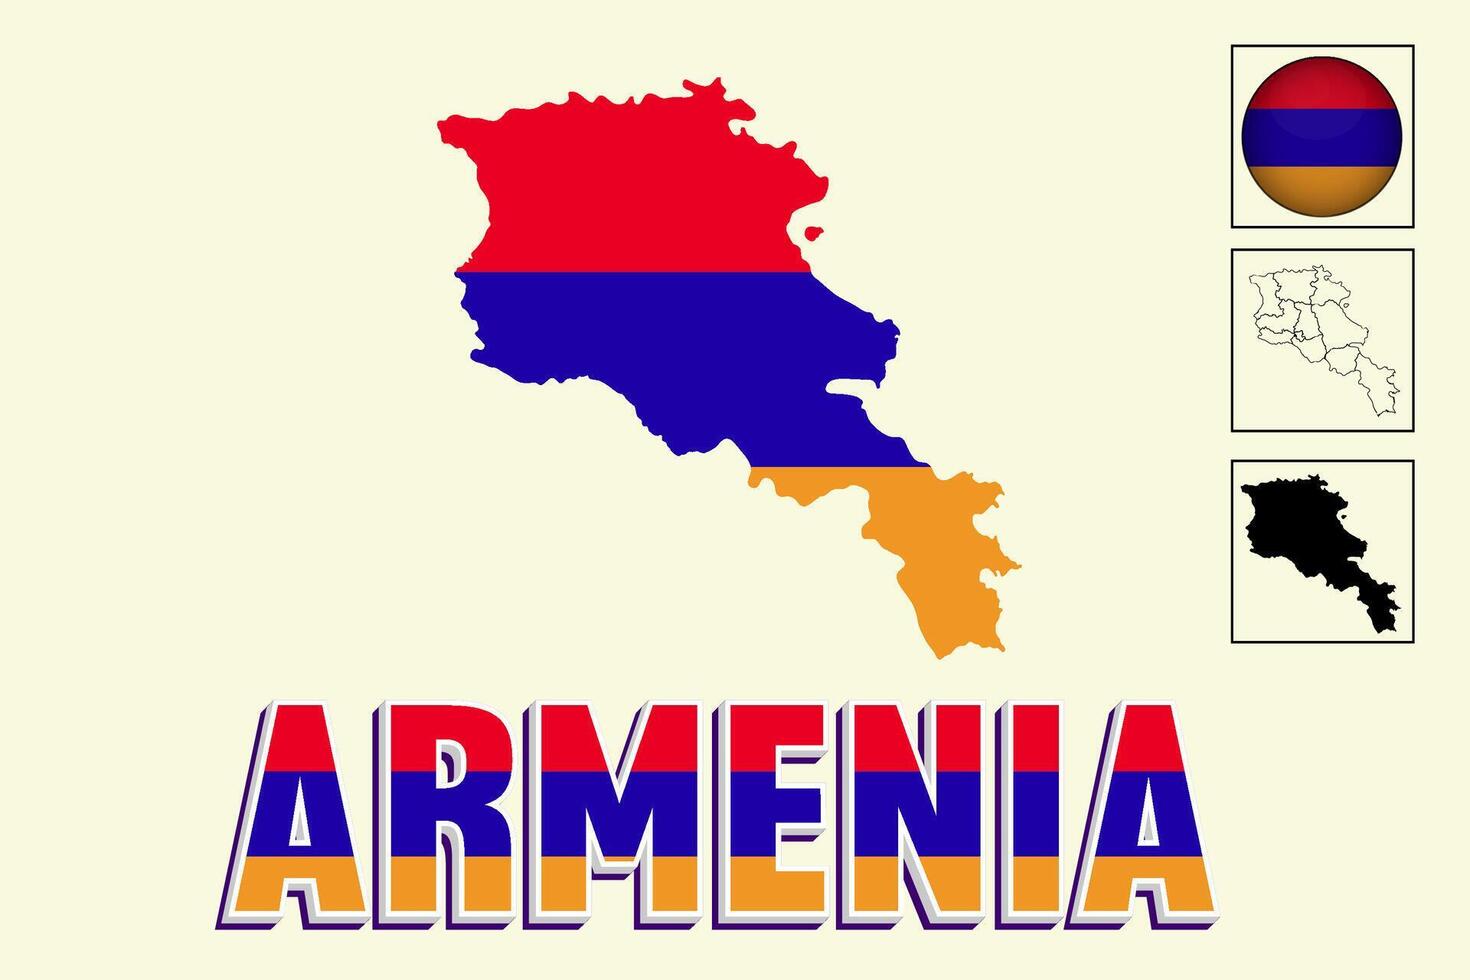 Armenia mapa y Armenia bandera vector dibujo